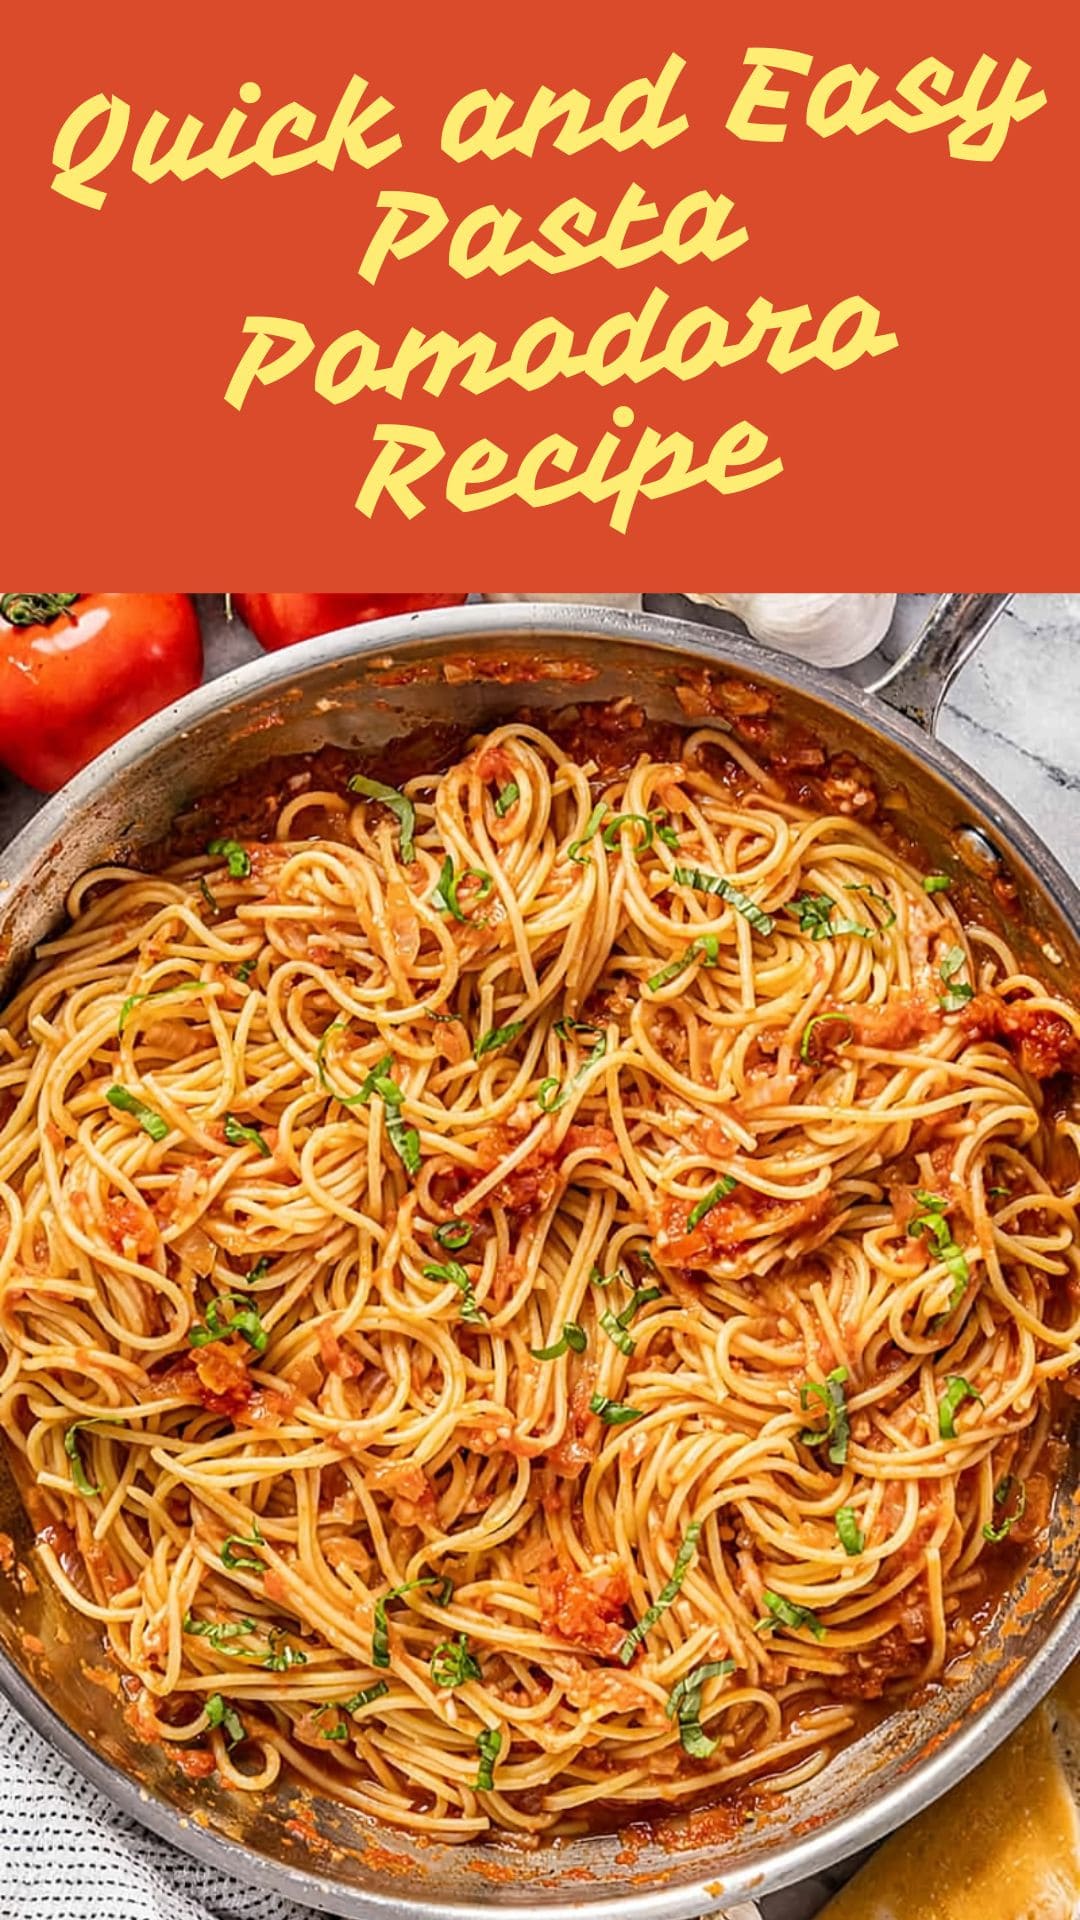 Quick and Easy Pasta Pomodoro Recipe